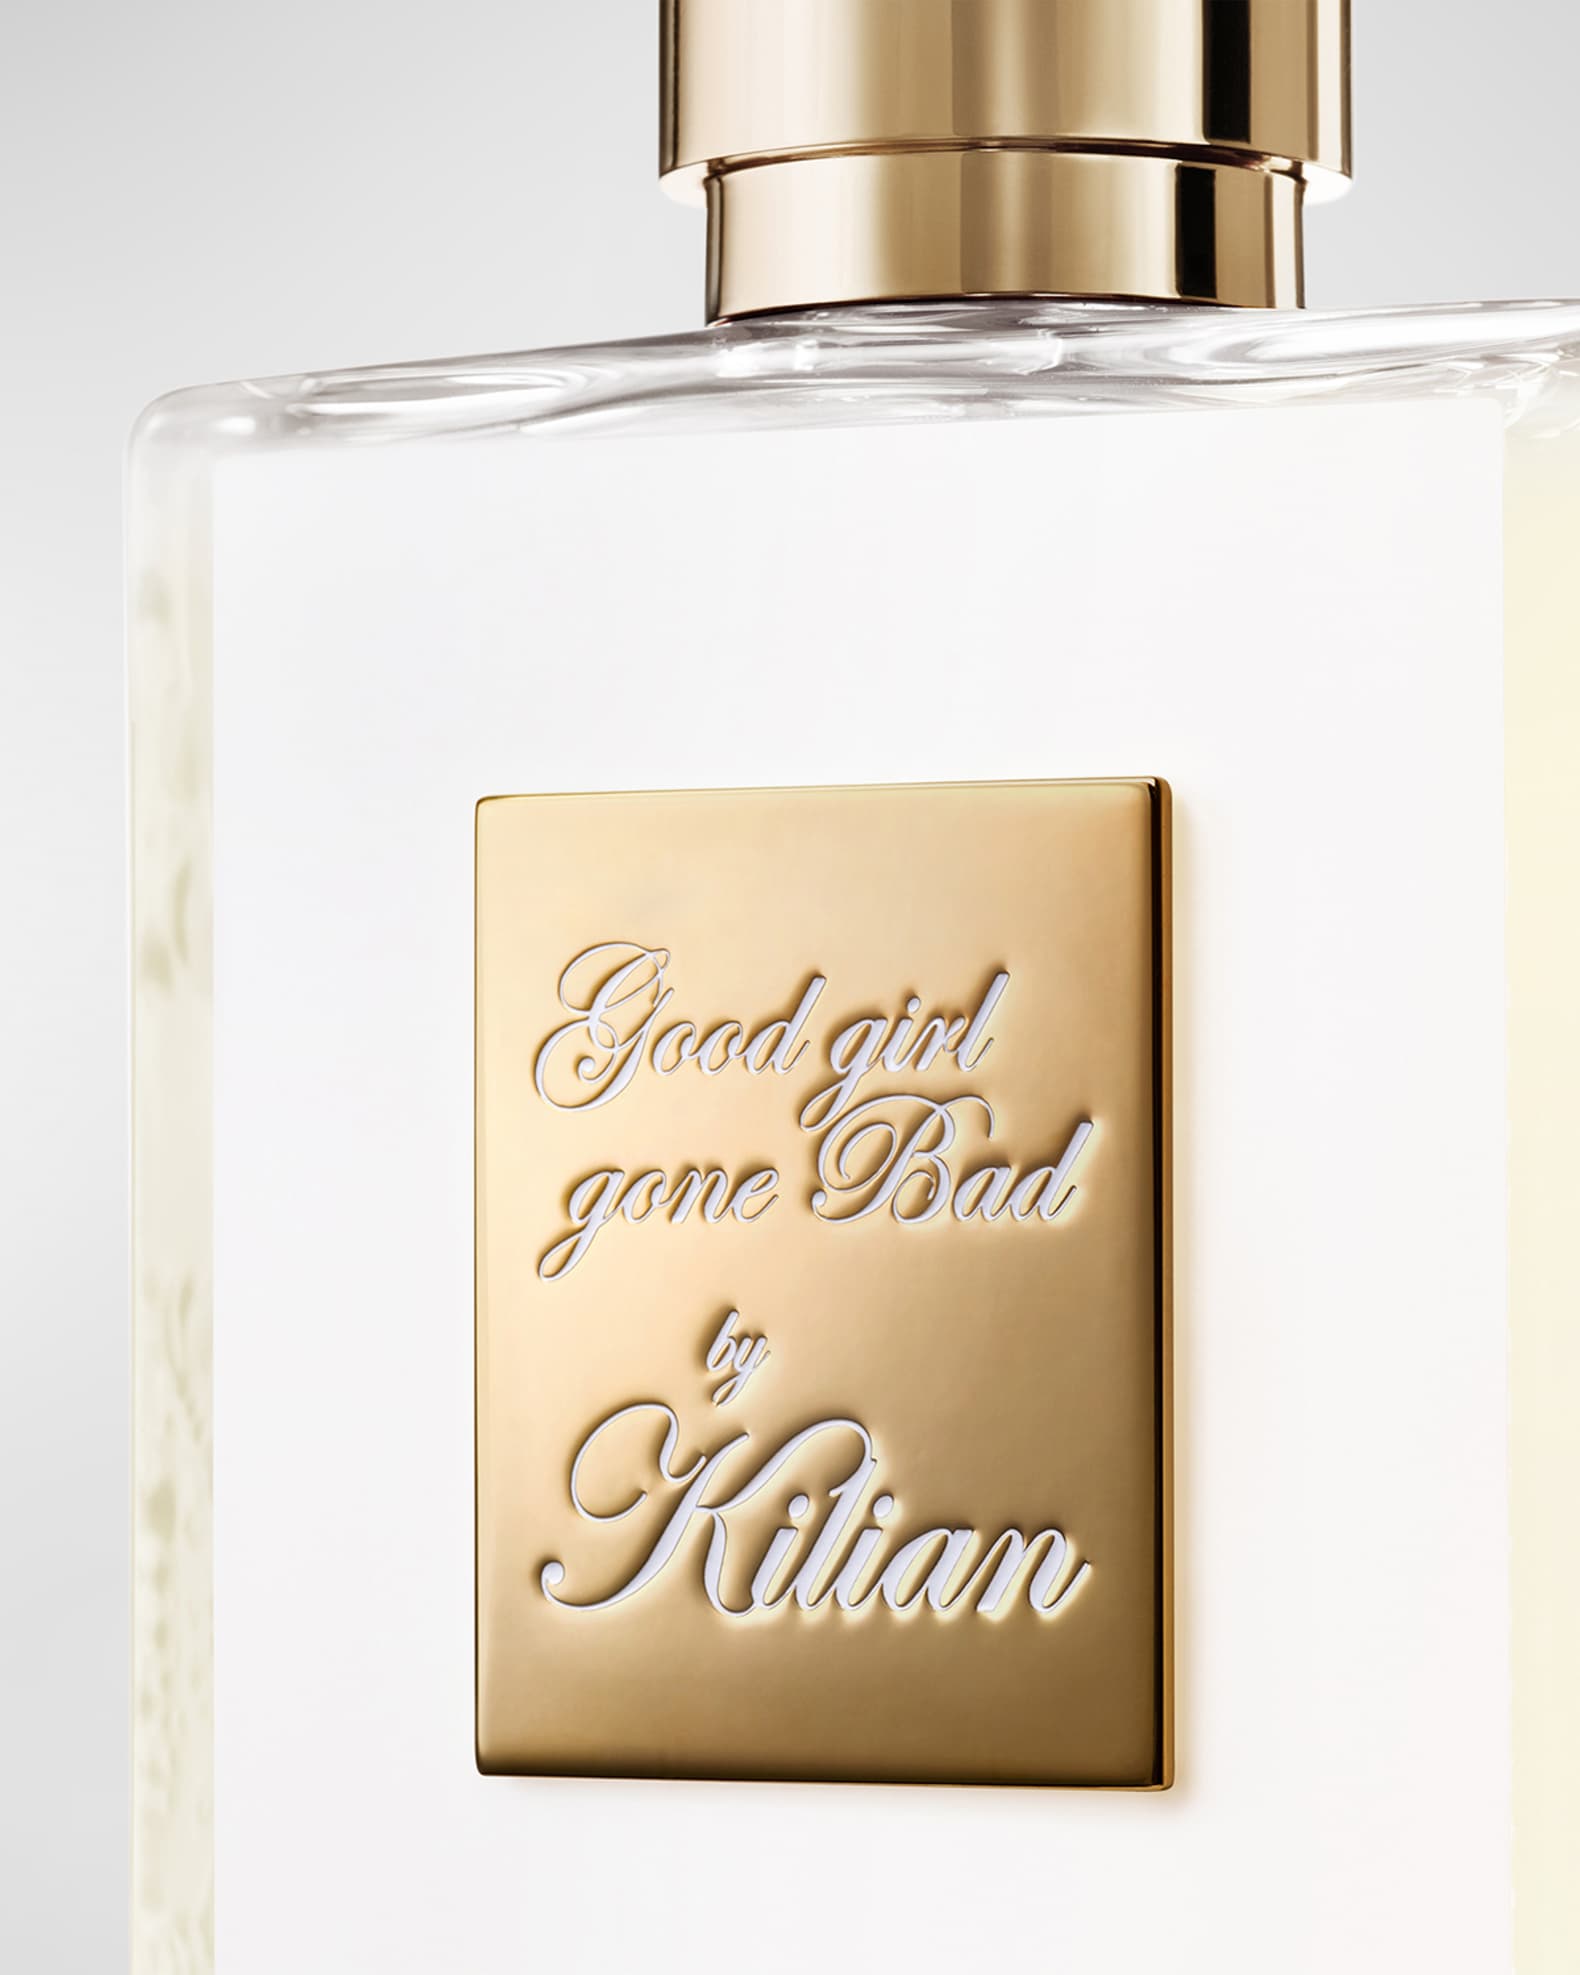 Good Girl Gone Bad Perfume, 50 mL by KILIAN PARIS